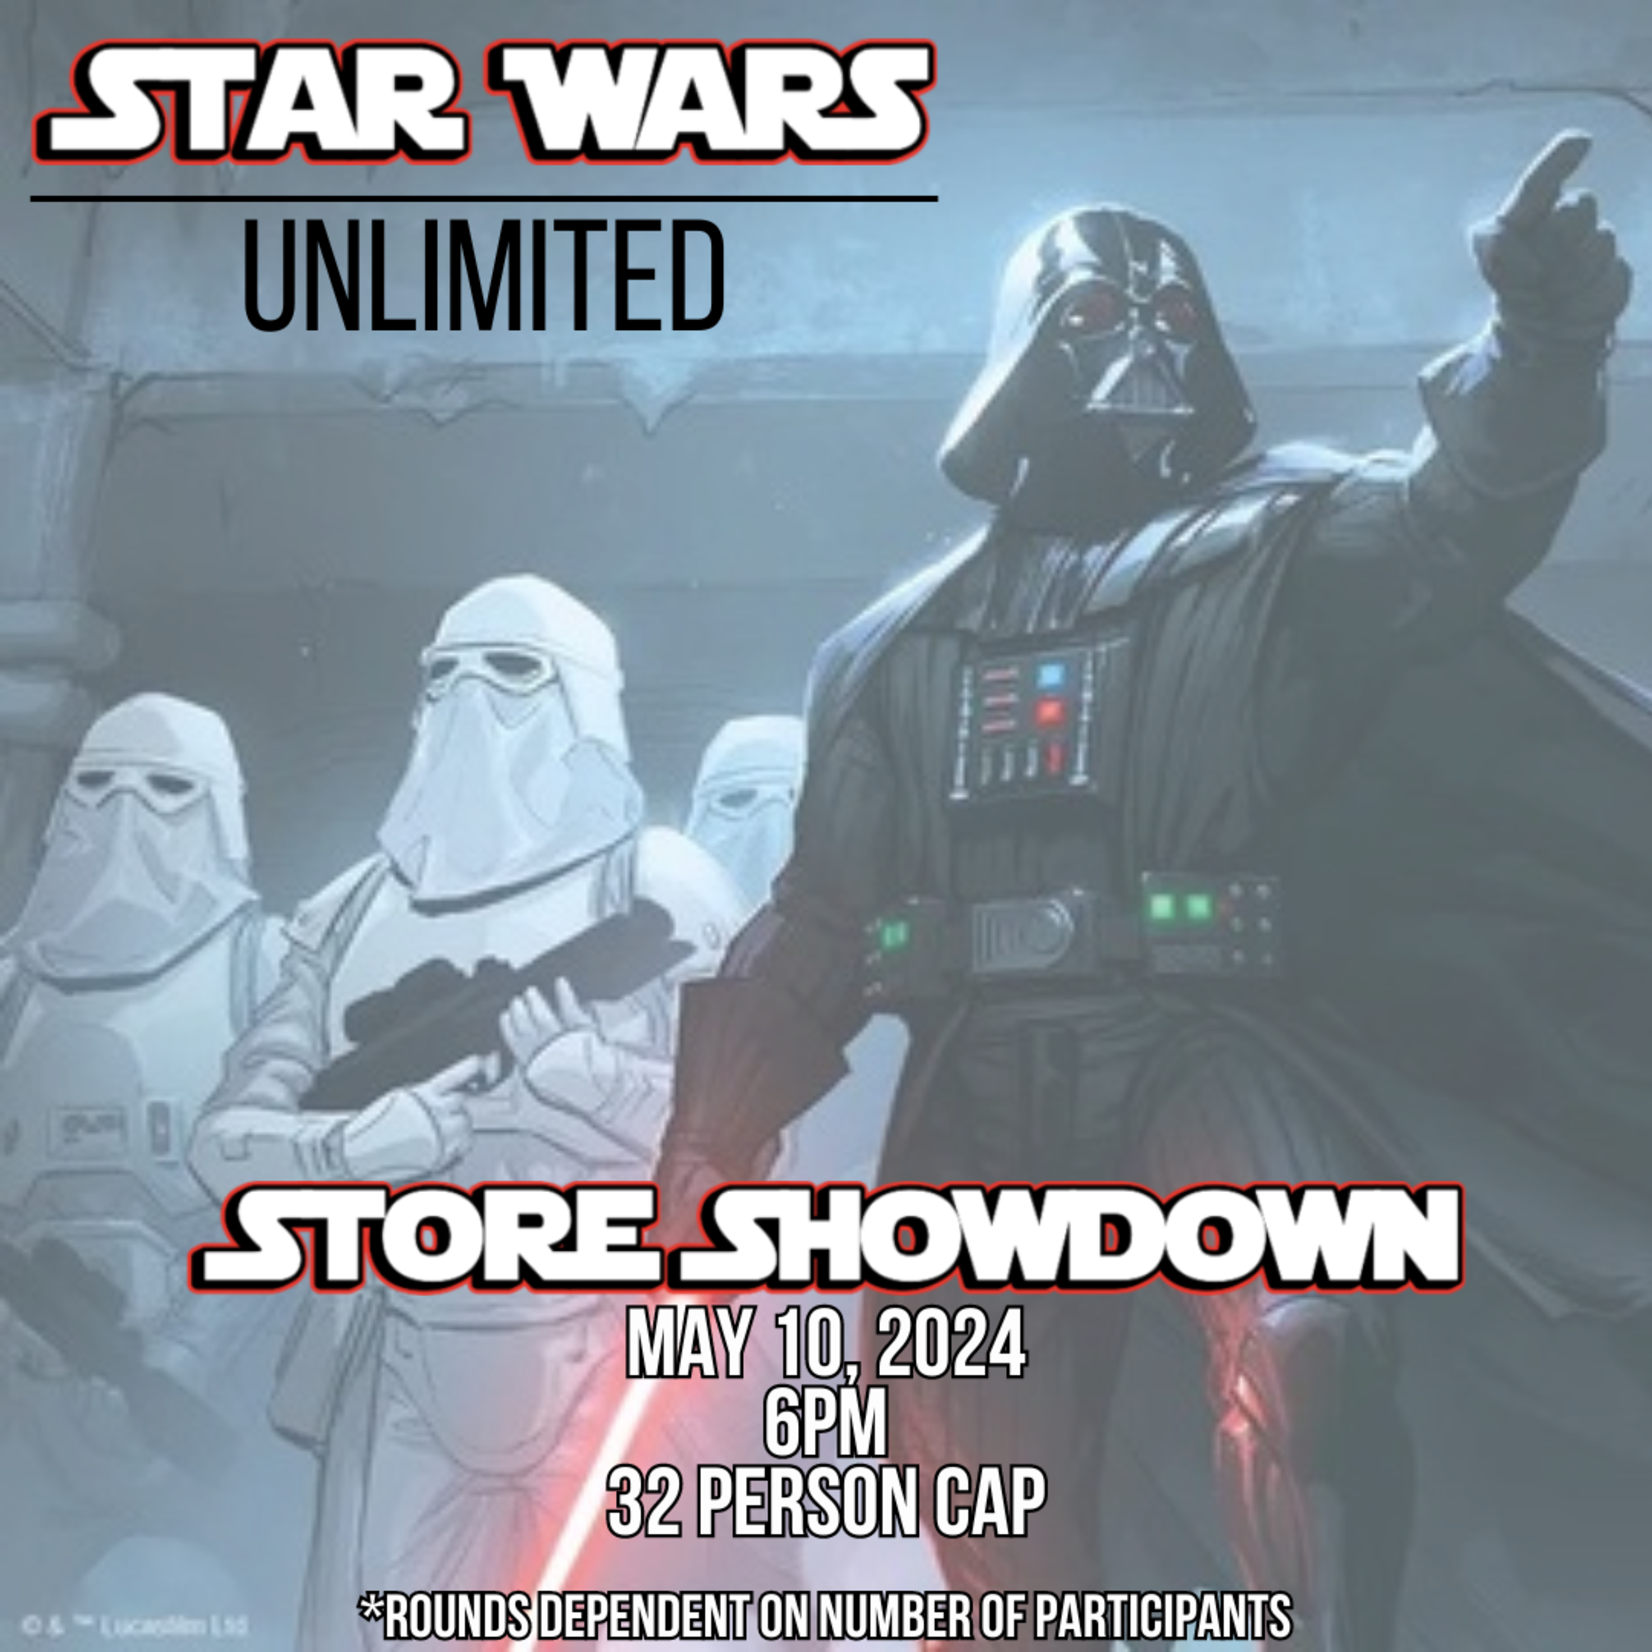 5/10/24 - Star Wars: Unlimited Store Showdown